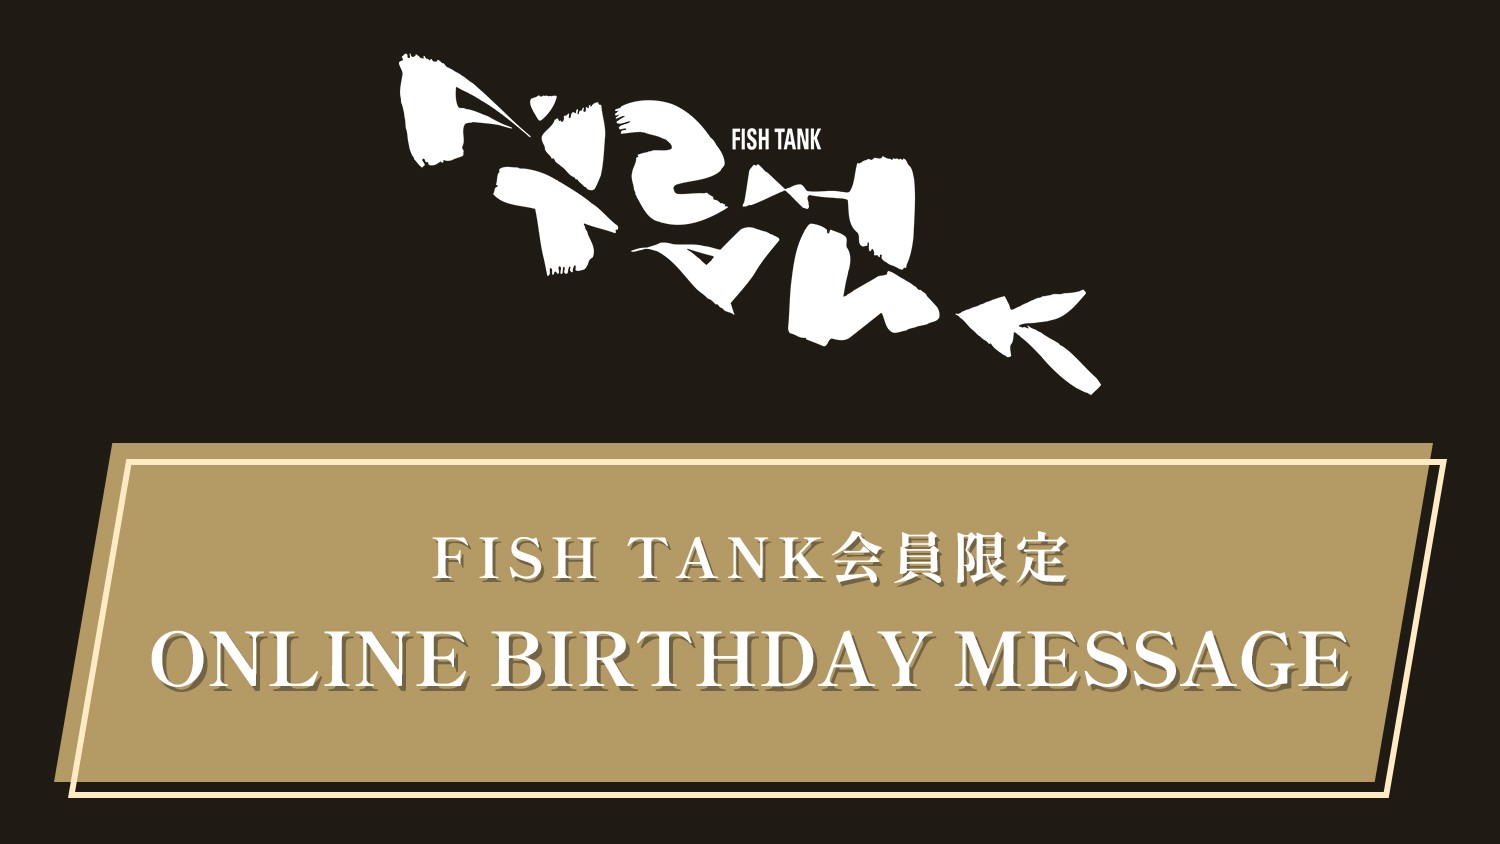 FISH TANK会員限定「Yagami Toll ONLINE BIRTHDAY MESSAGE」募集のお知らせ 